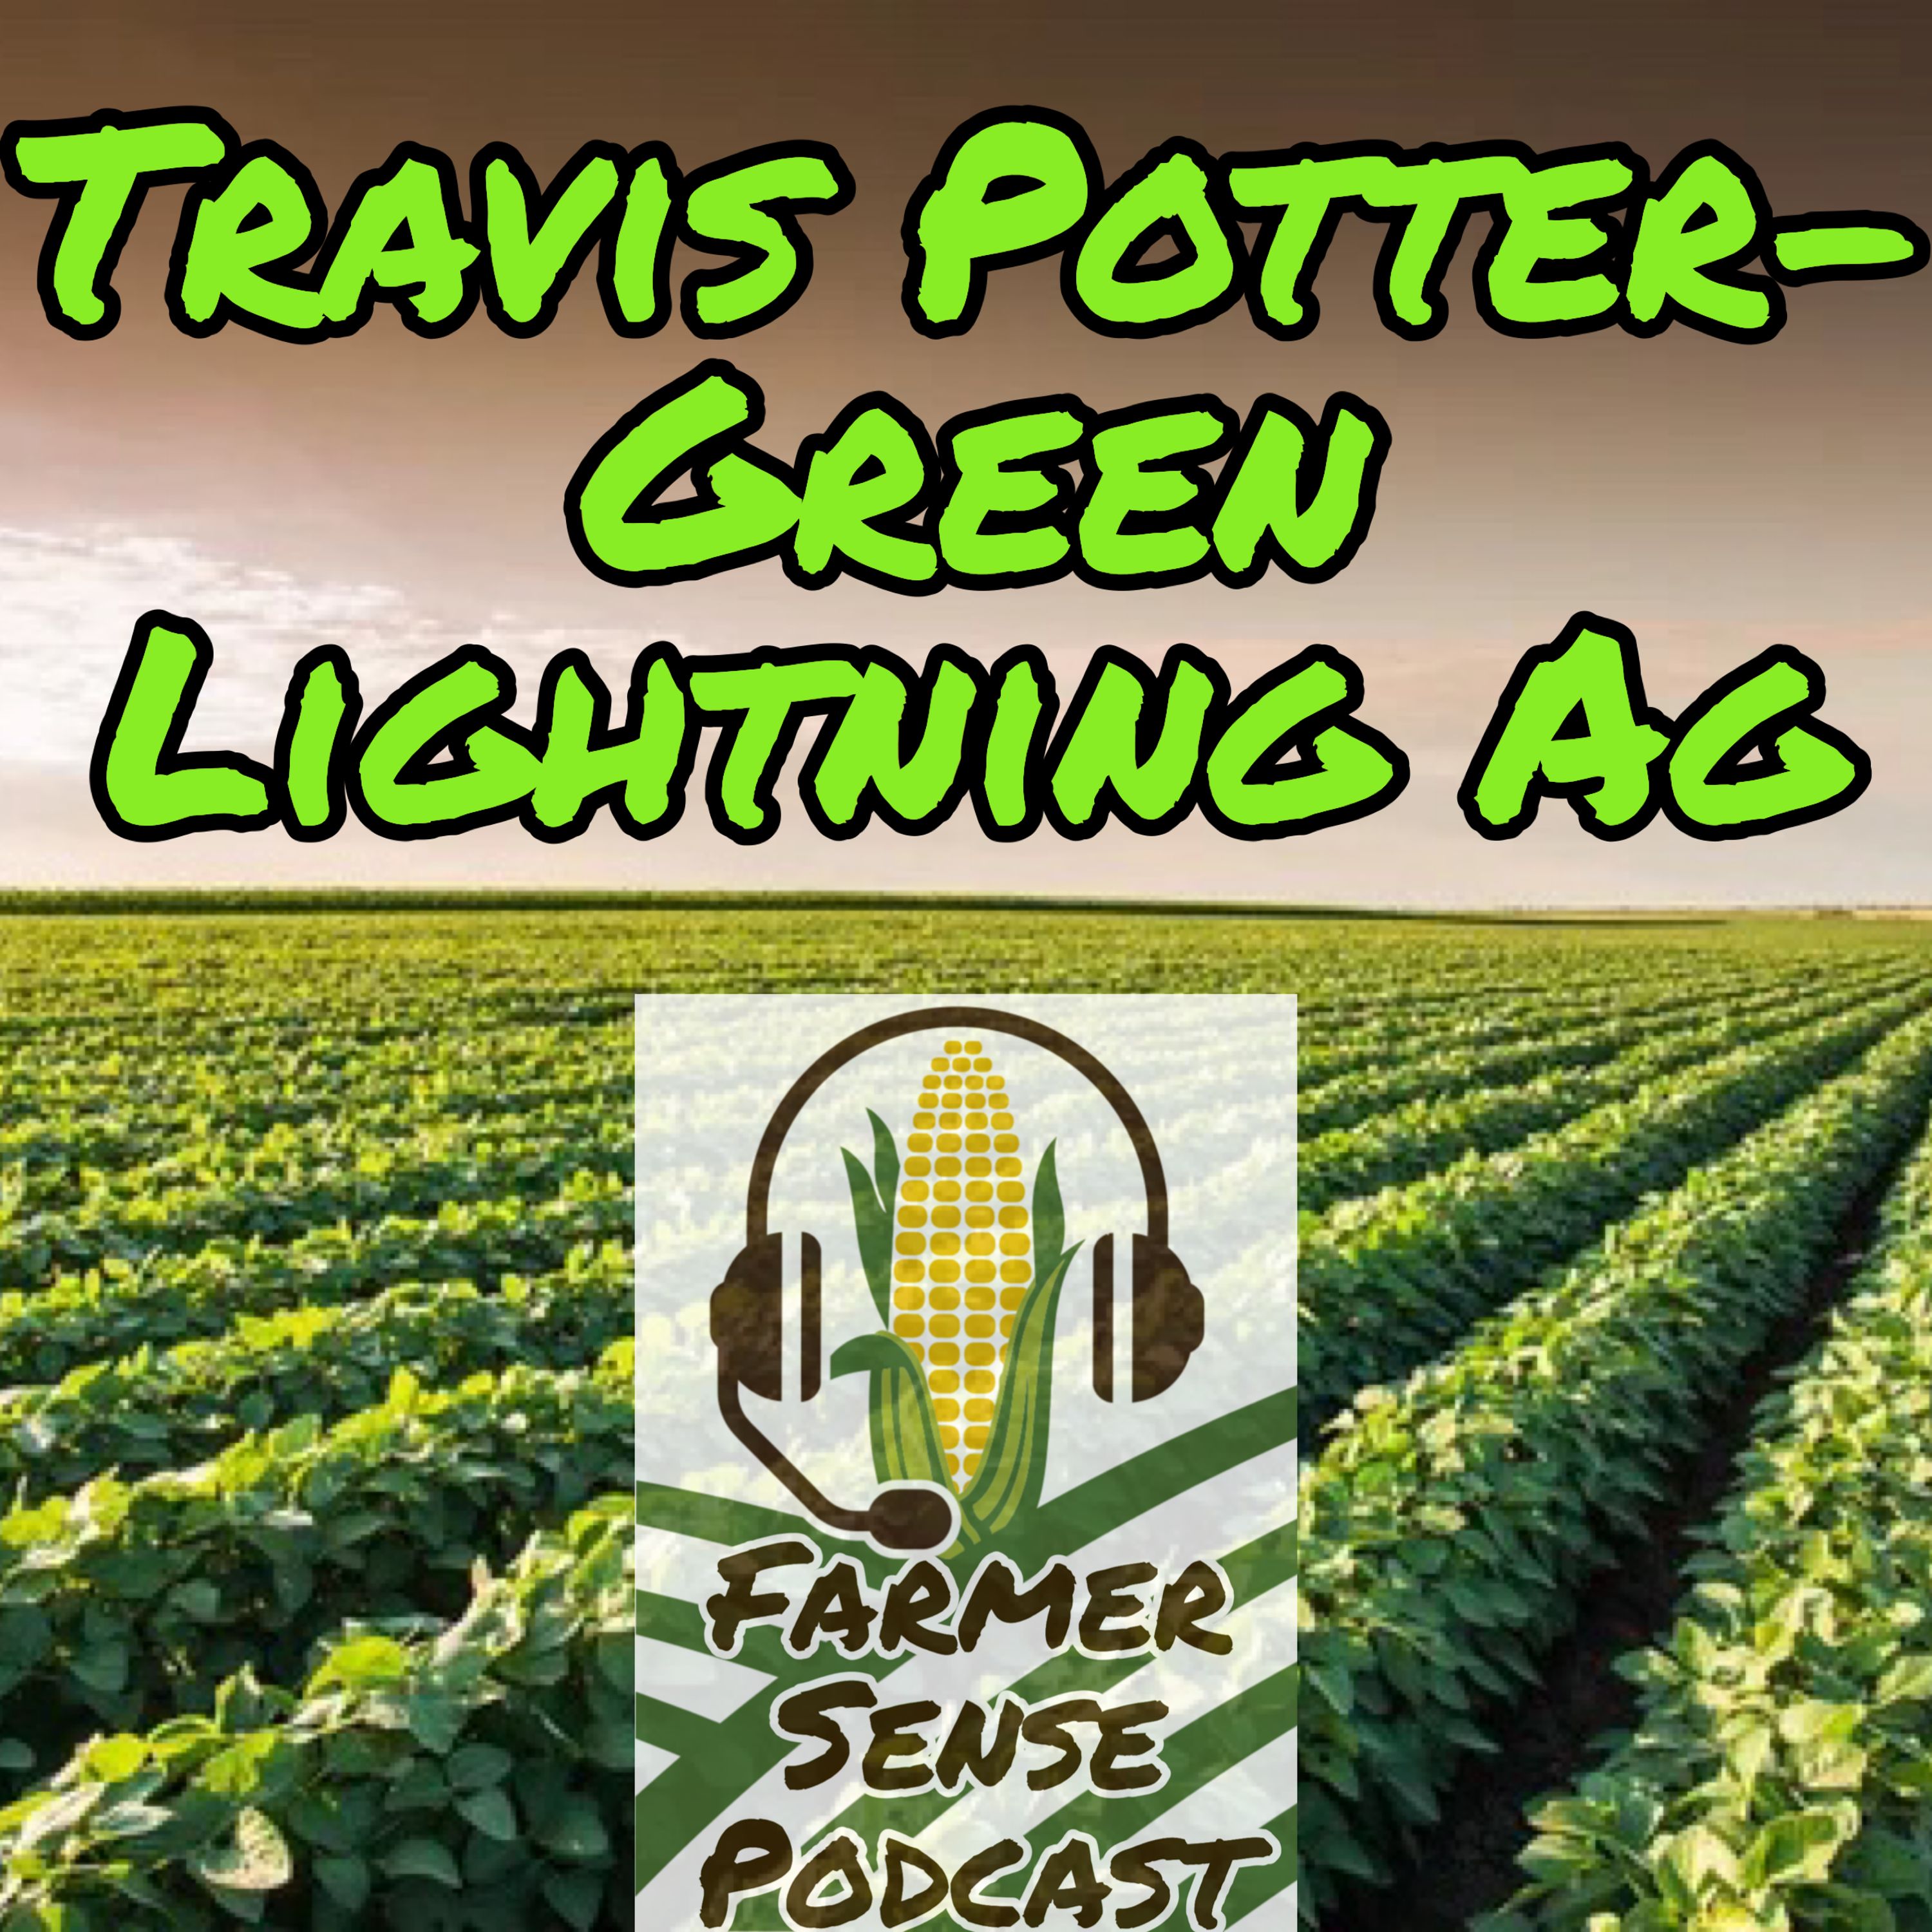 Travis Potter-Green Lightning Ag